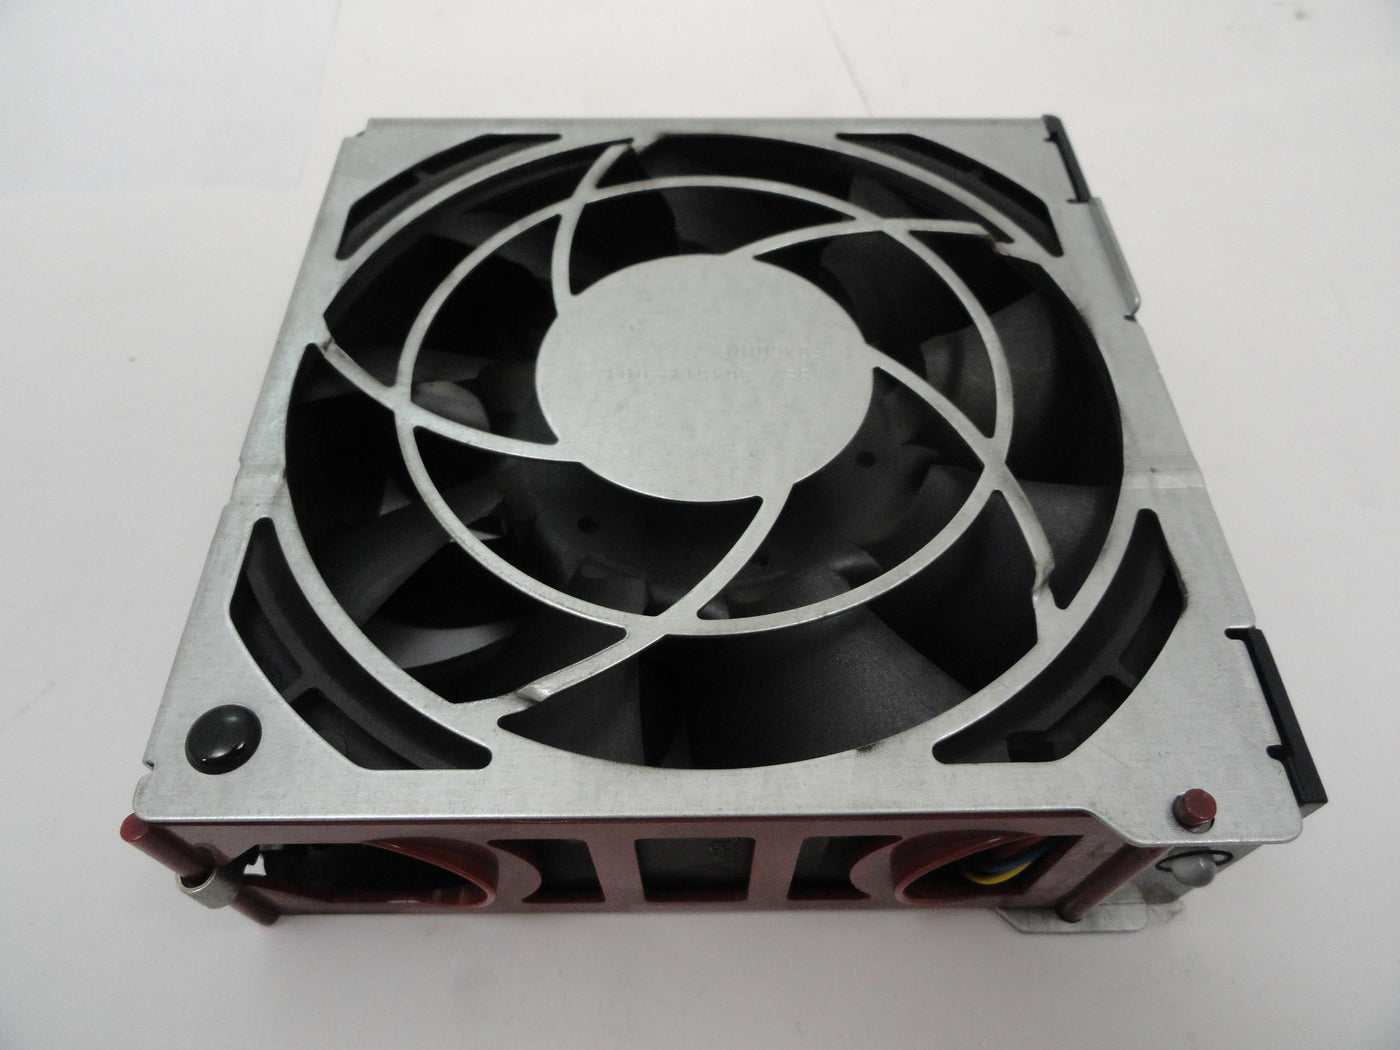 Cooler Fan Assembly from HP Proliant DL580 G4 ( TFC1212DE TFC1212DE  364517-001   Delta Electronics Foxconn )